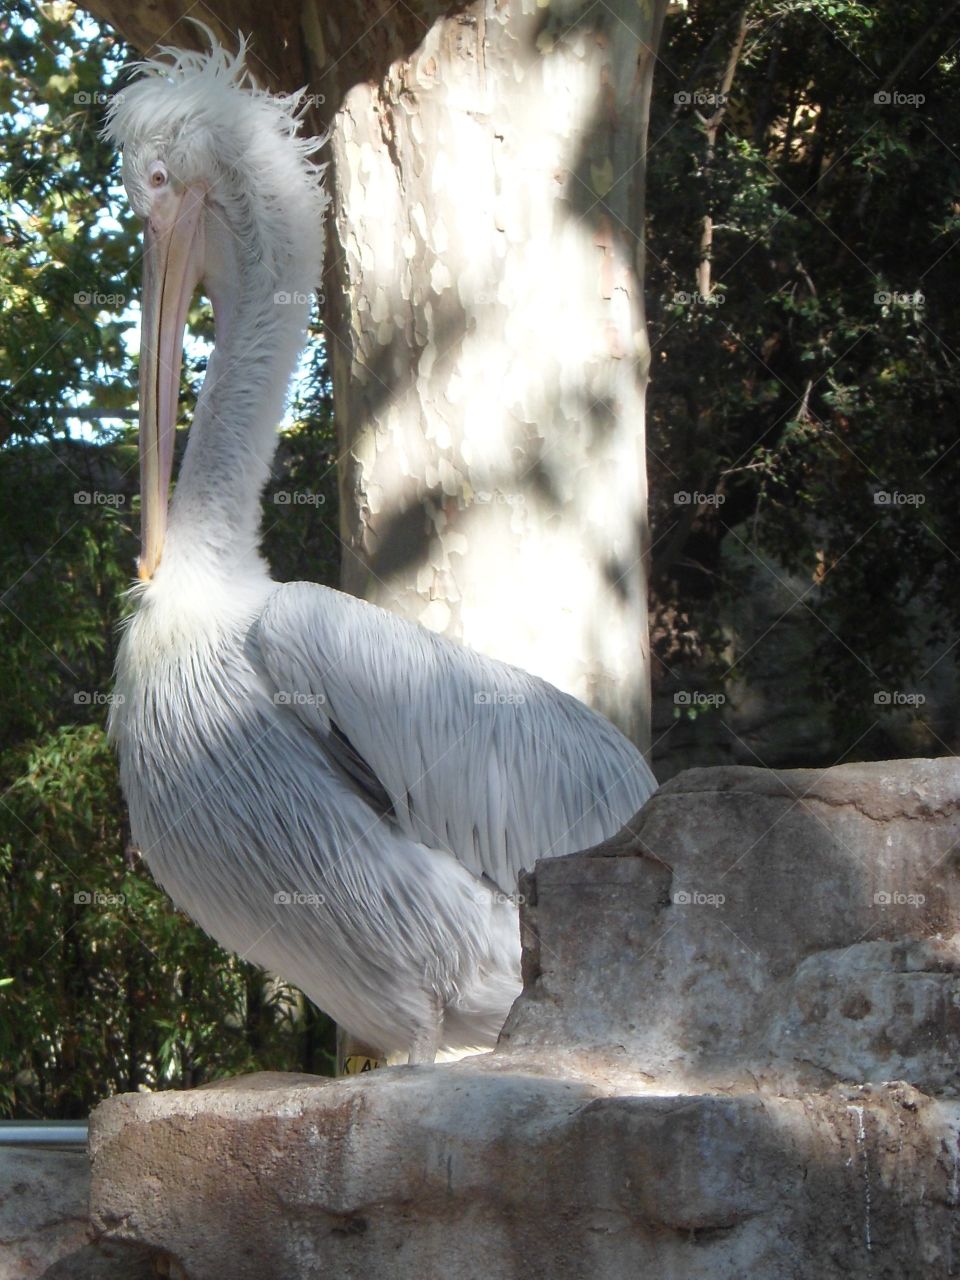 Pelican in a zoo in Spain